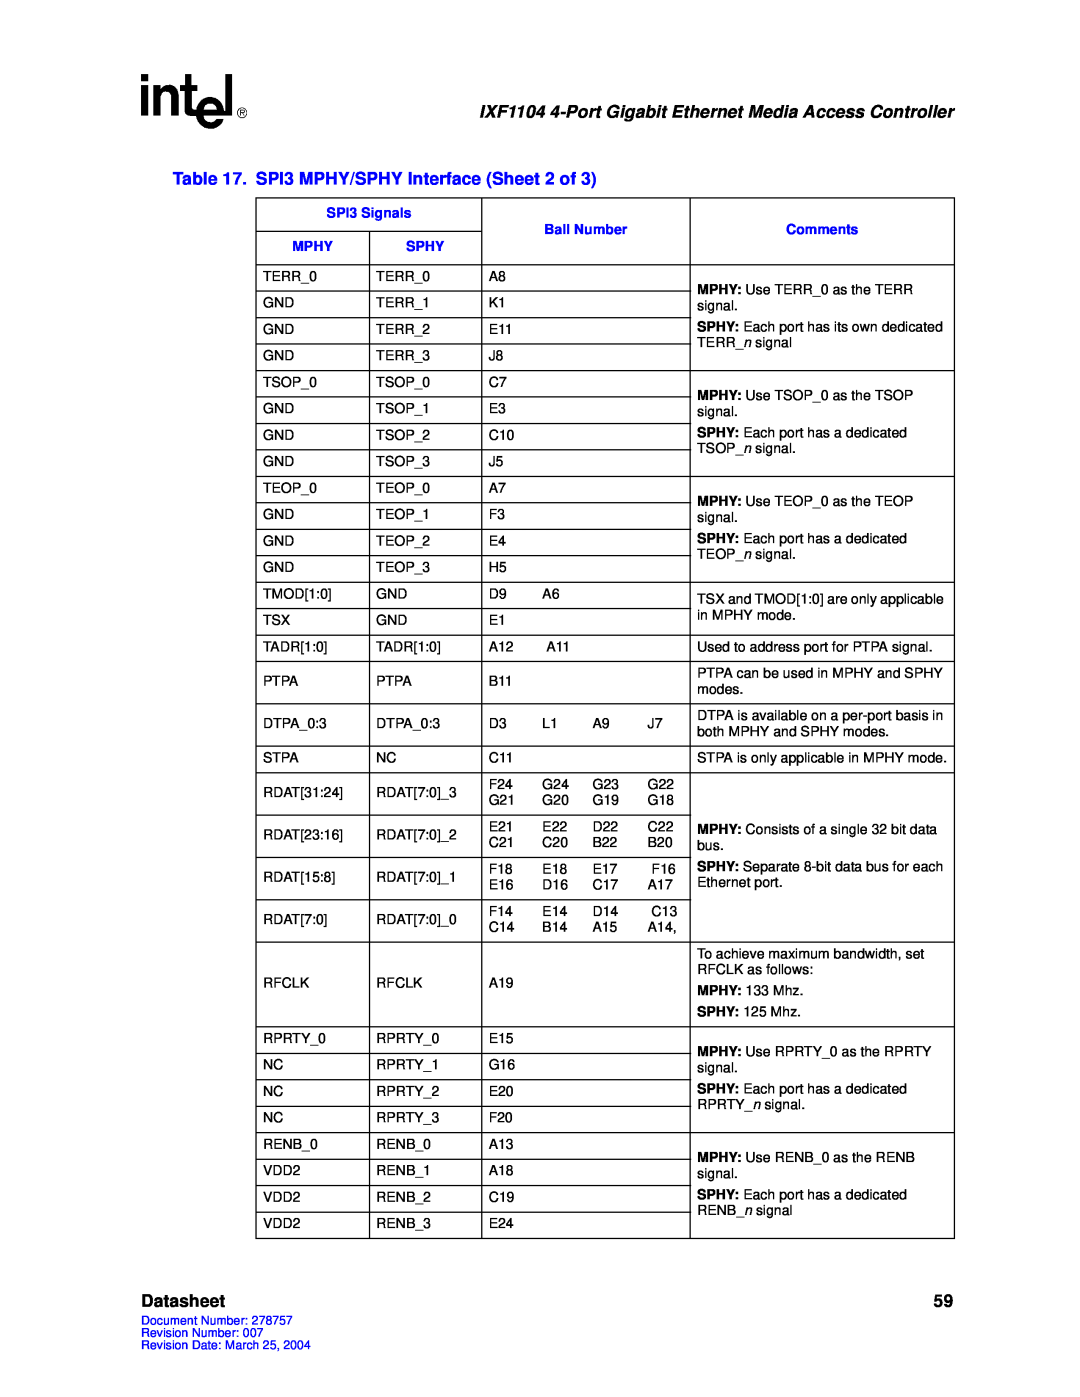 Intel IXF1104 manual SPI3 MPHY/SPHY Interface Sheet 2 of, Datasheet 